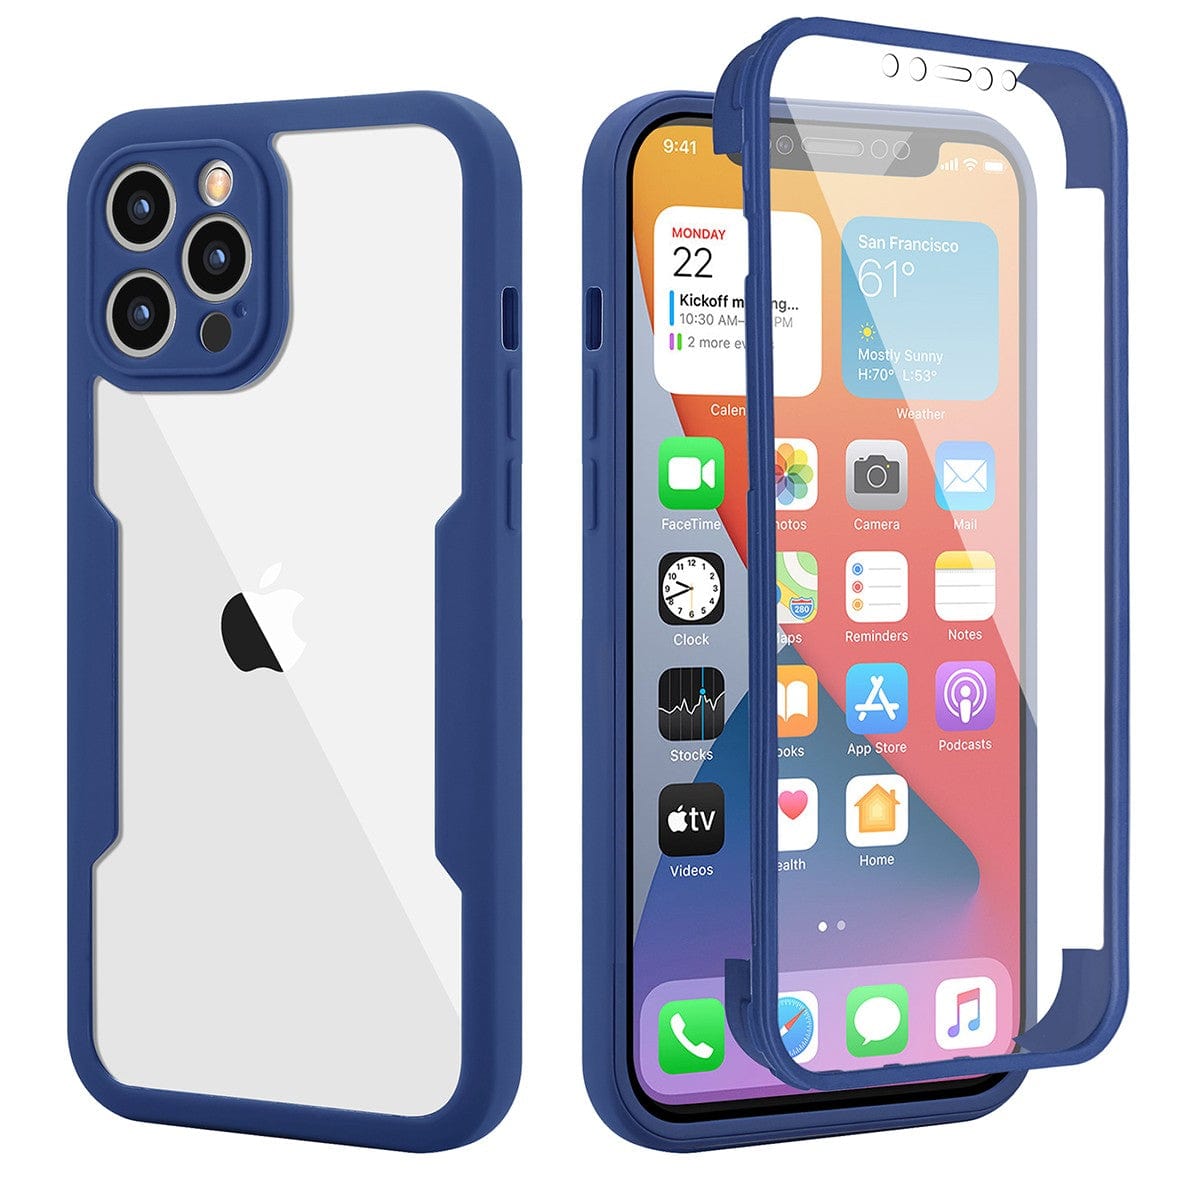 Husa Max Defence pentru iPhone 11 Pro, Bumper Albastru, Fata Dubla Transparenta, Protectie Antisoc Full 360 ( fata, spate, margini )